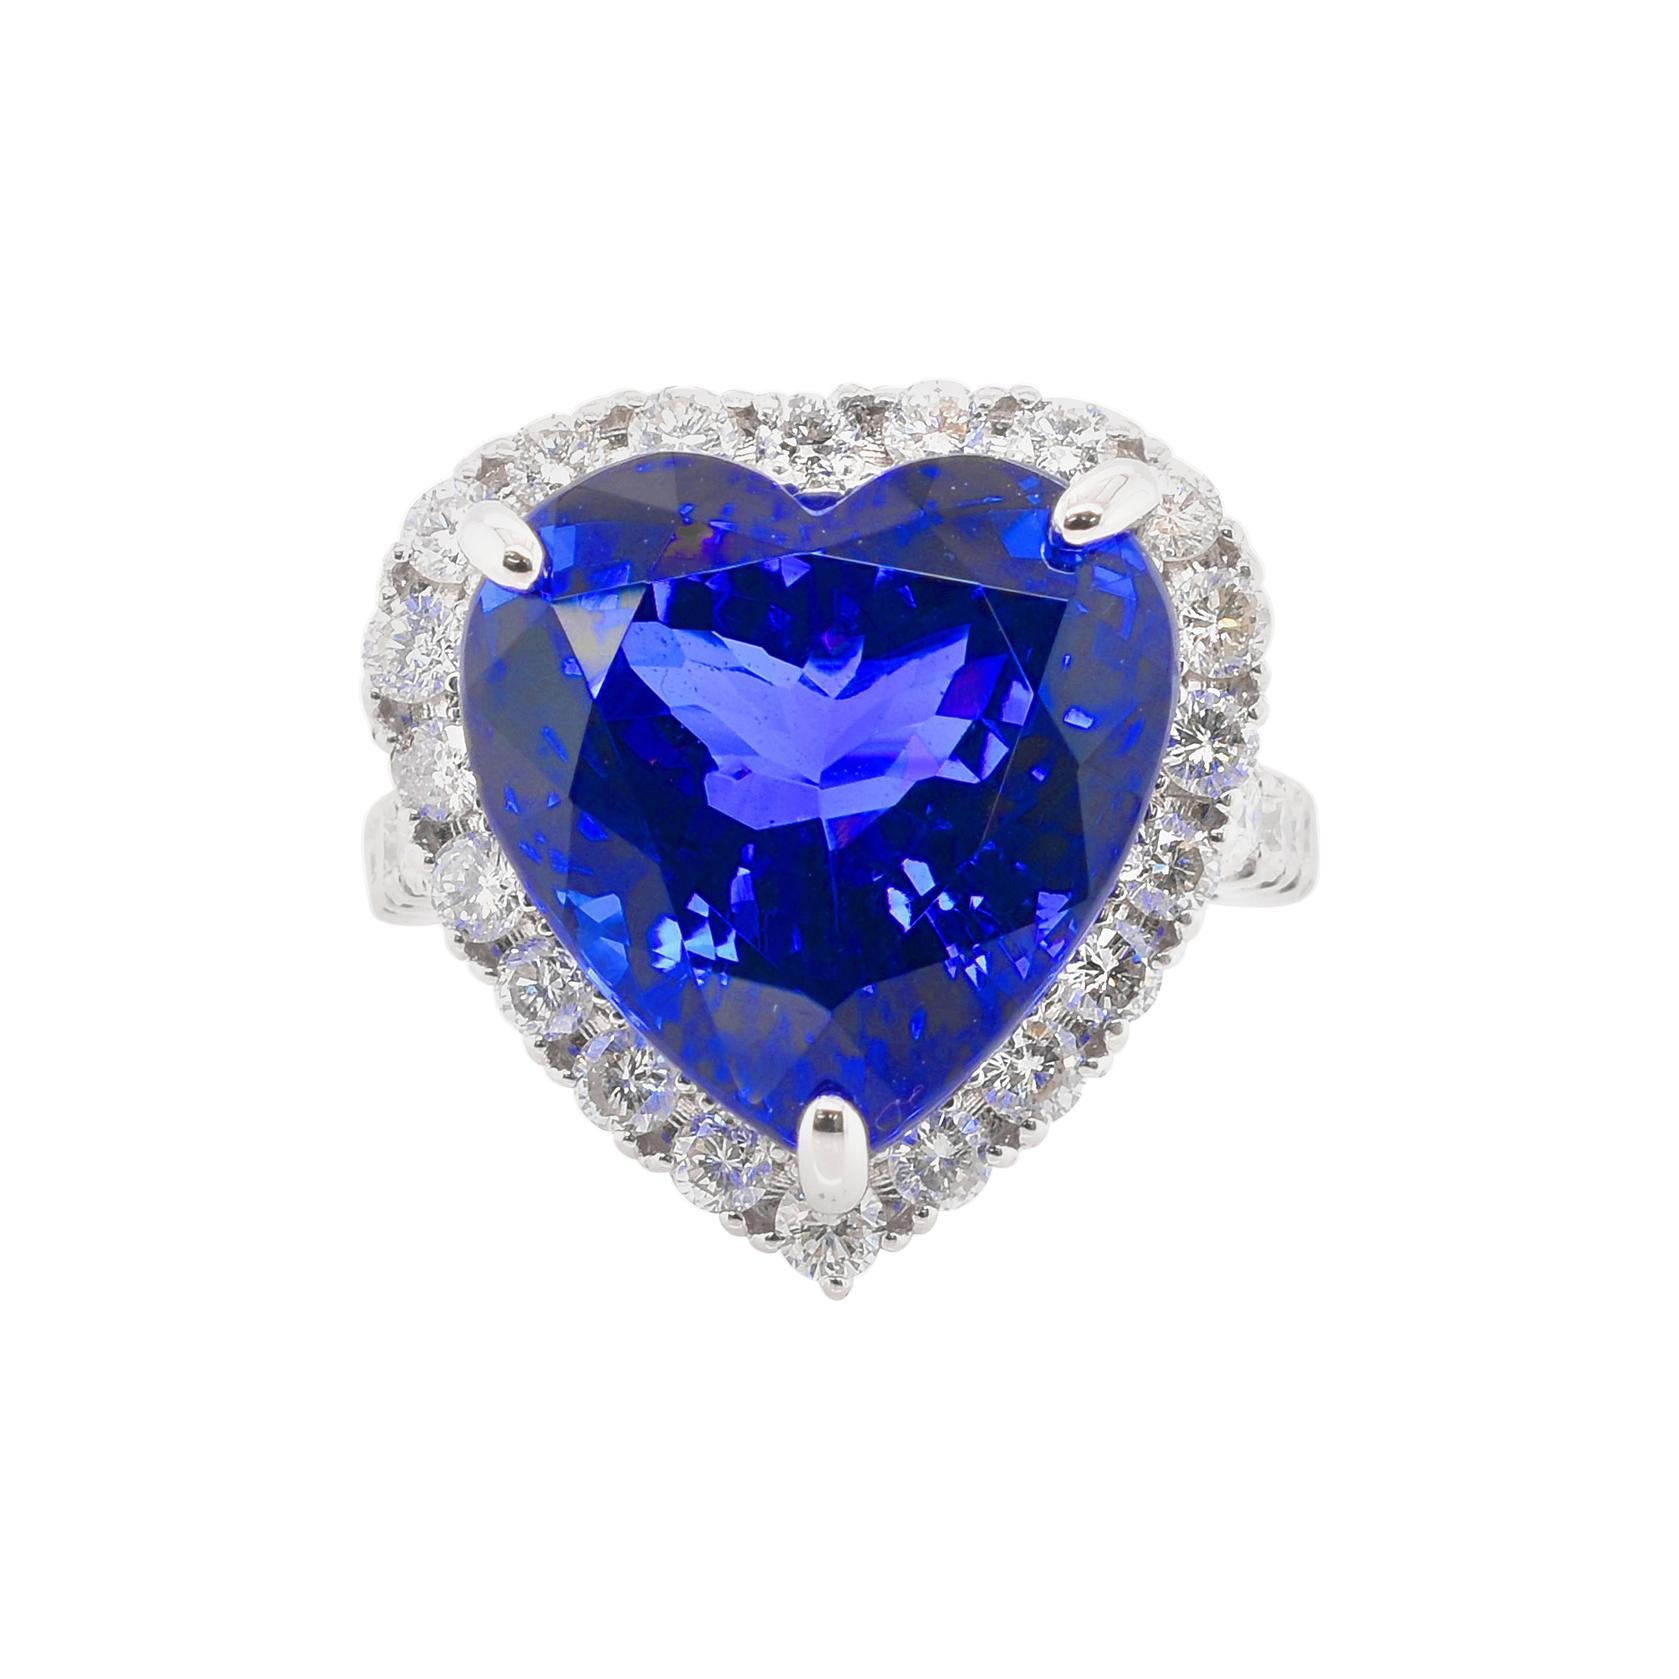 14.80 Carat Heart-Shaped Tanzanite and Diamond Ring Set in Platinum